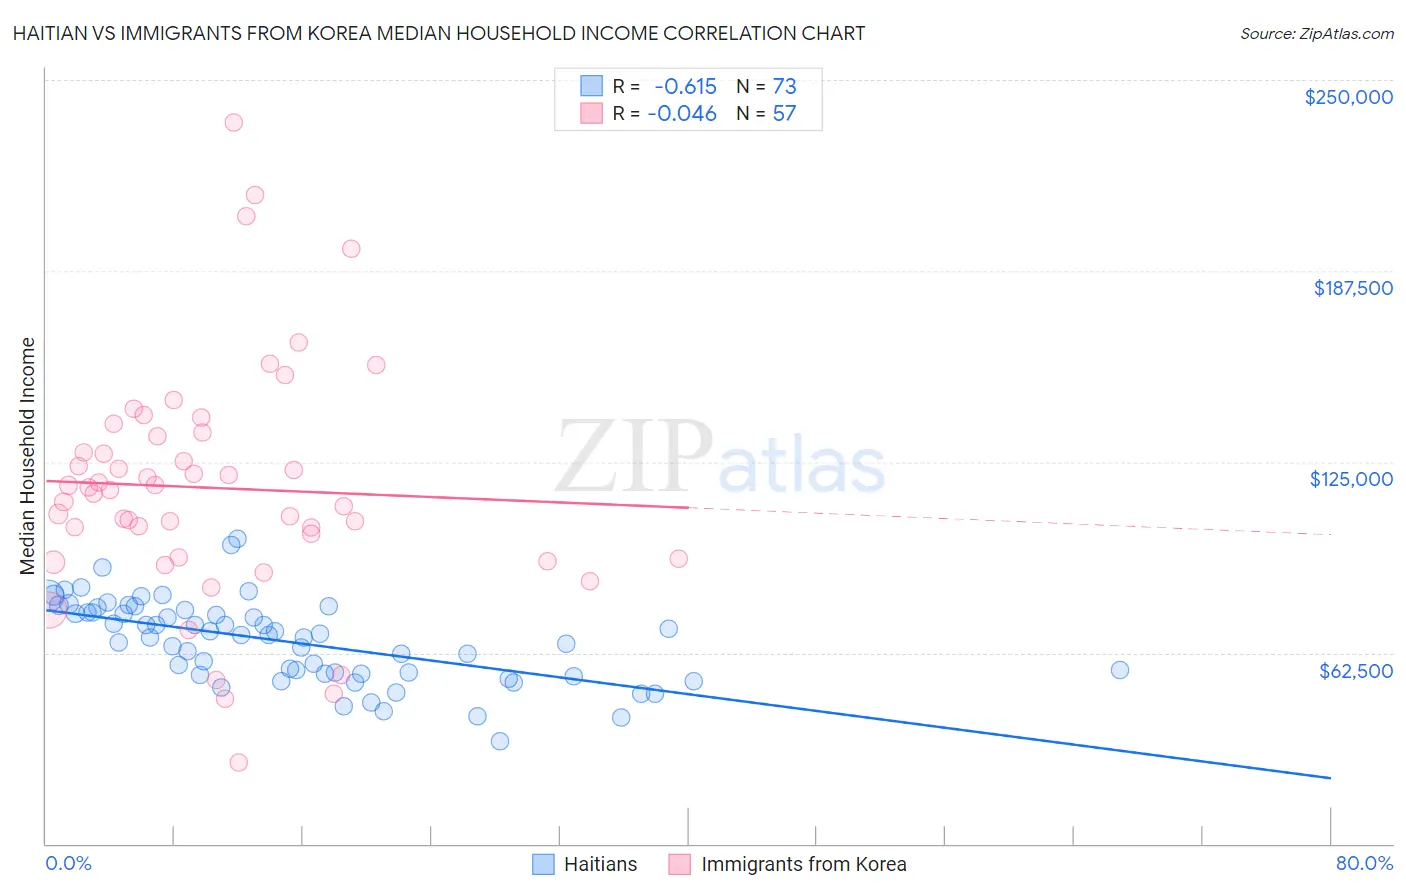 Haitian vs Immigrants from Korea Median Household Income